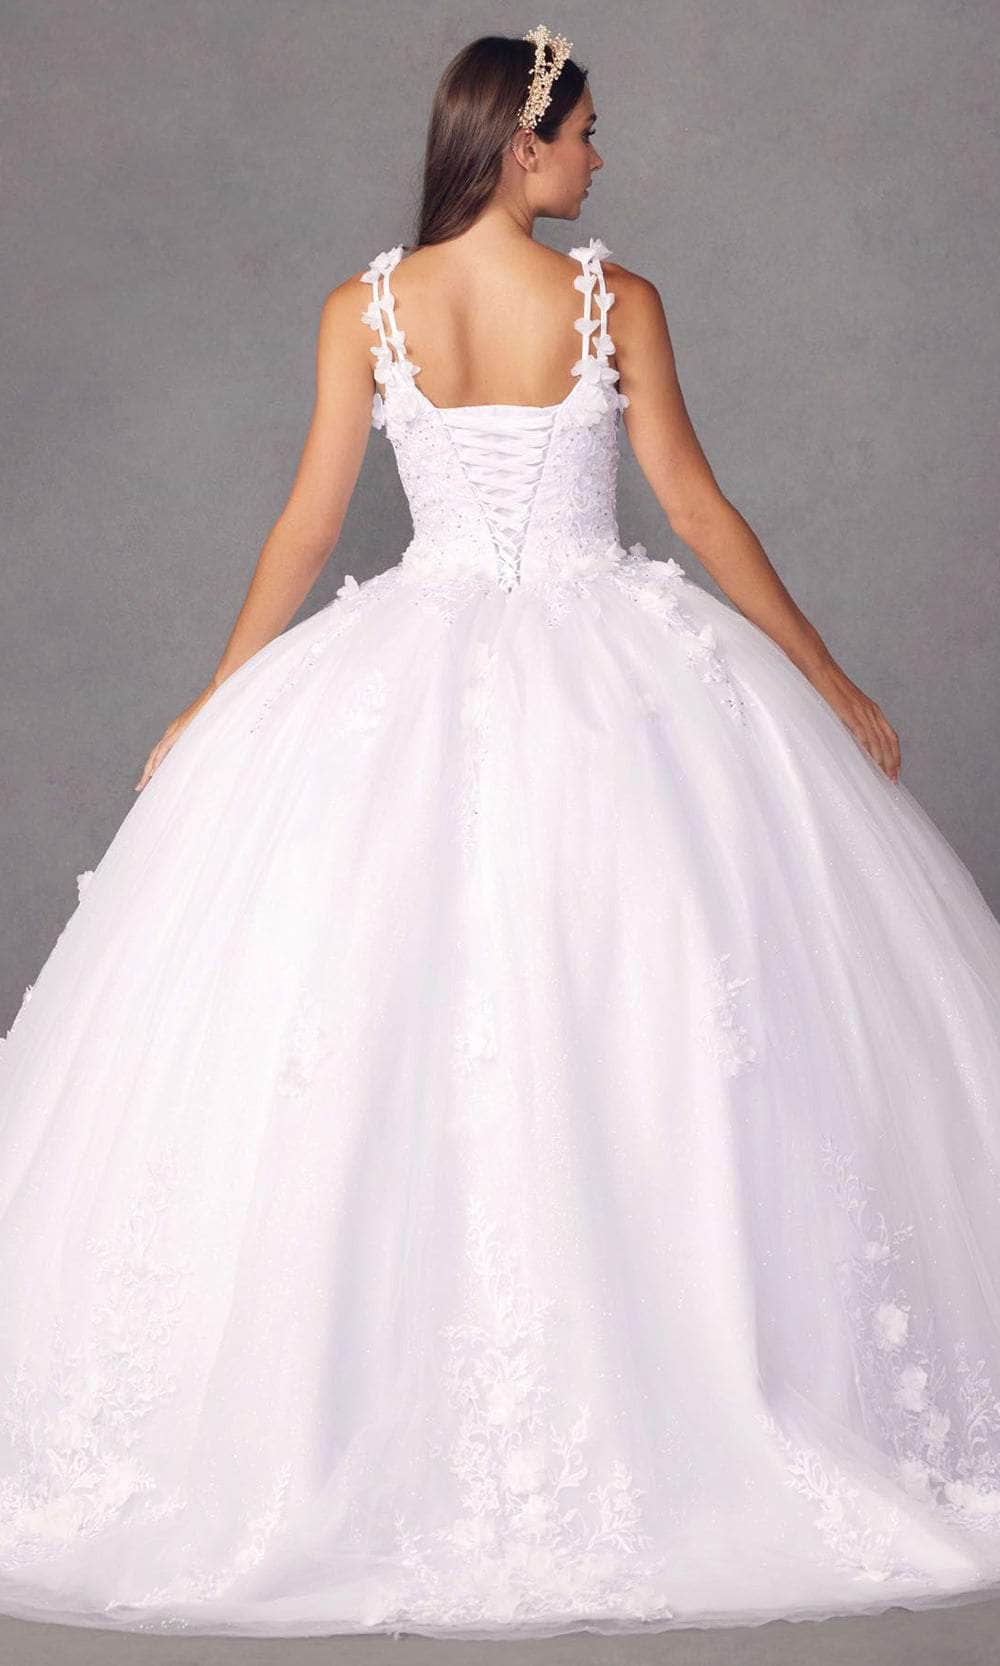 Juliet Dresses 1437 - Floral Applique Ball Gown Special Occasion Dress